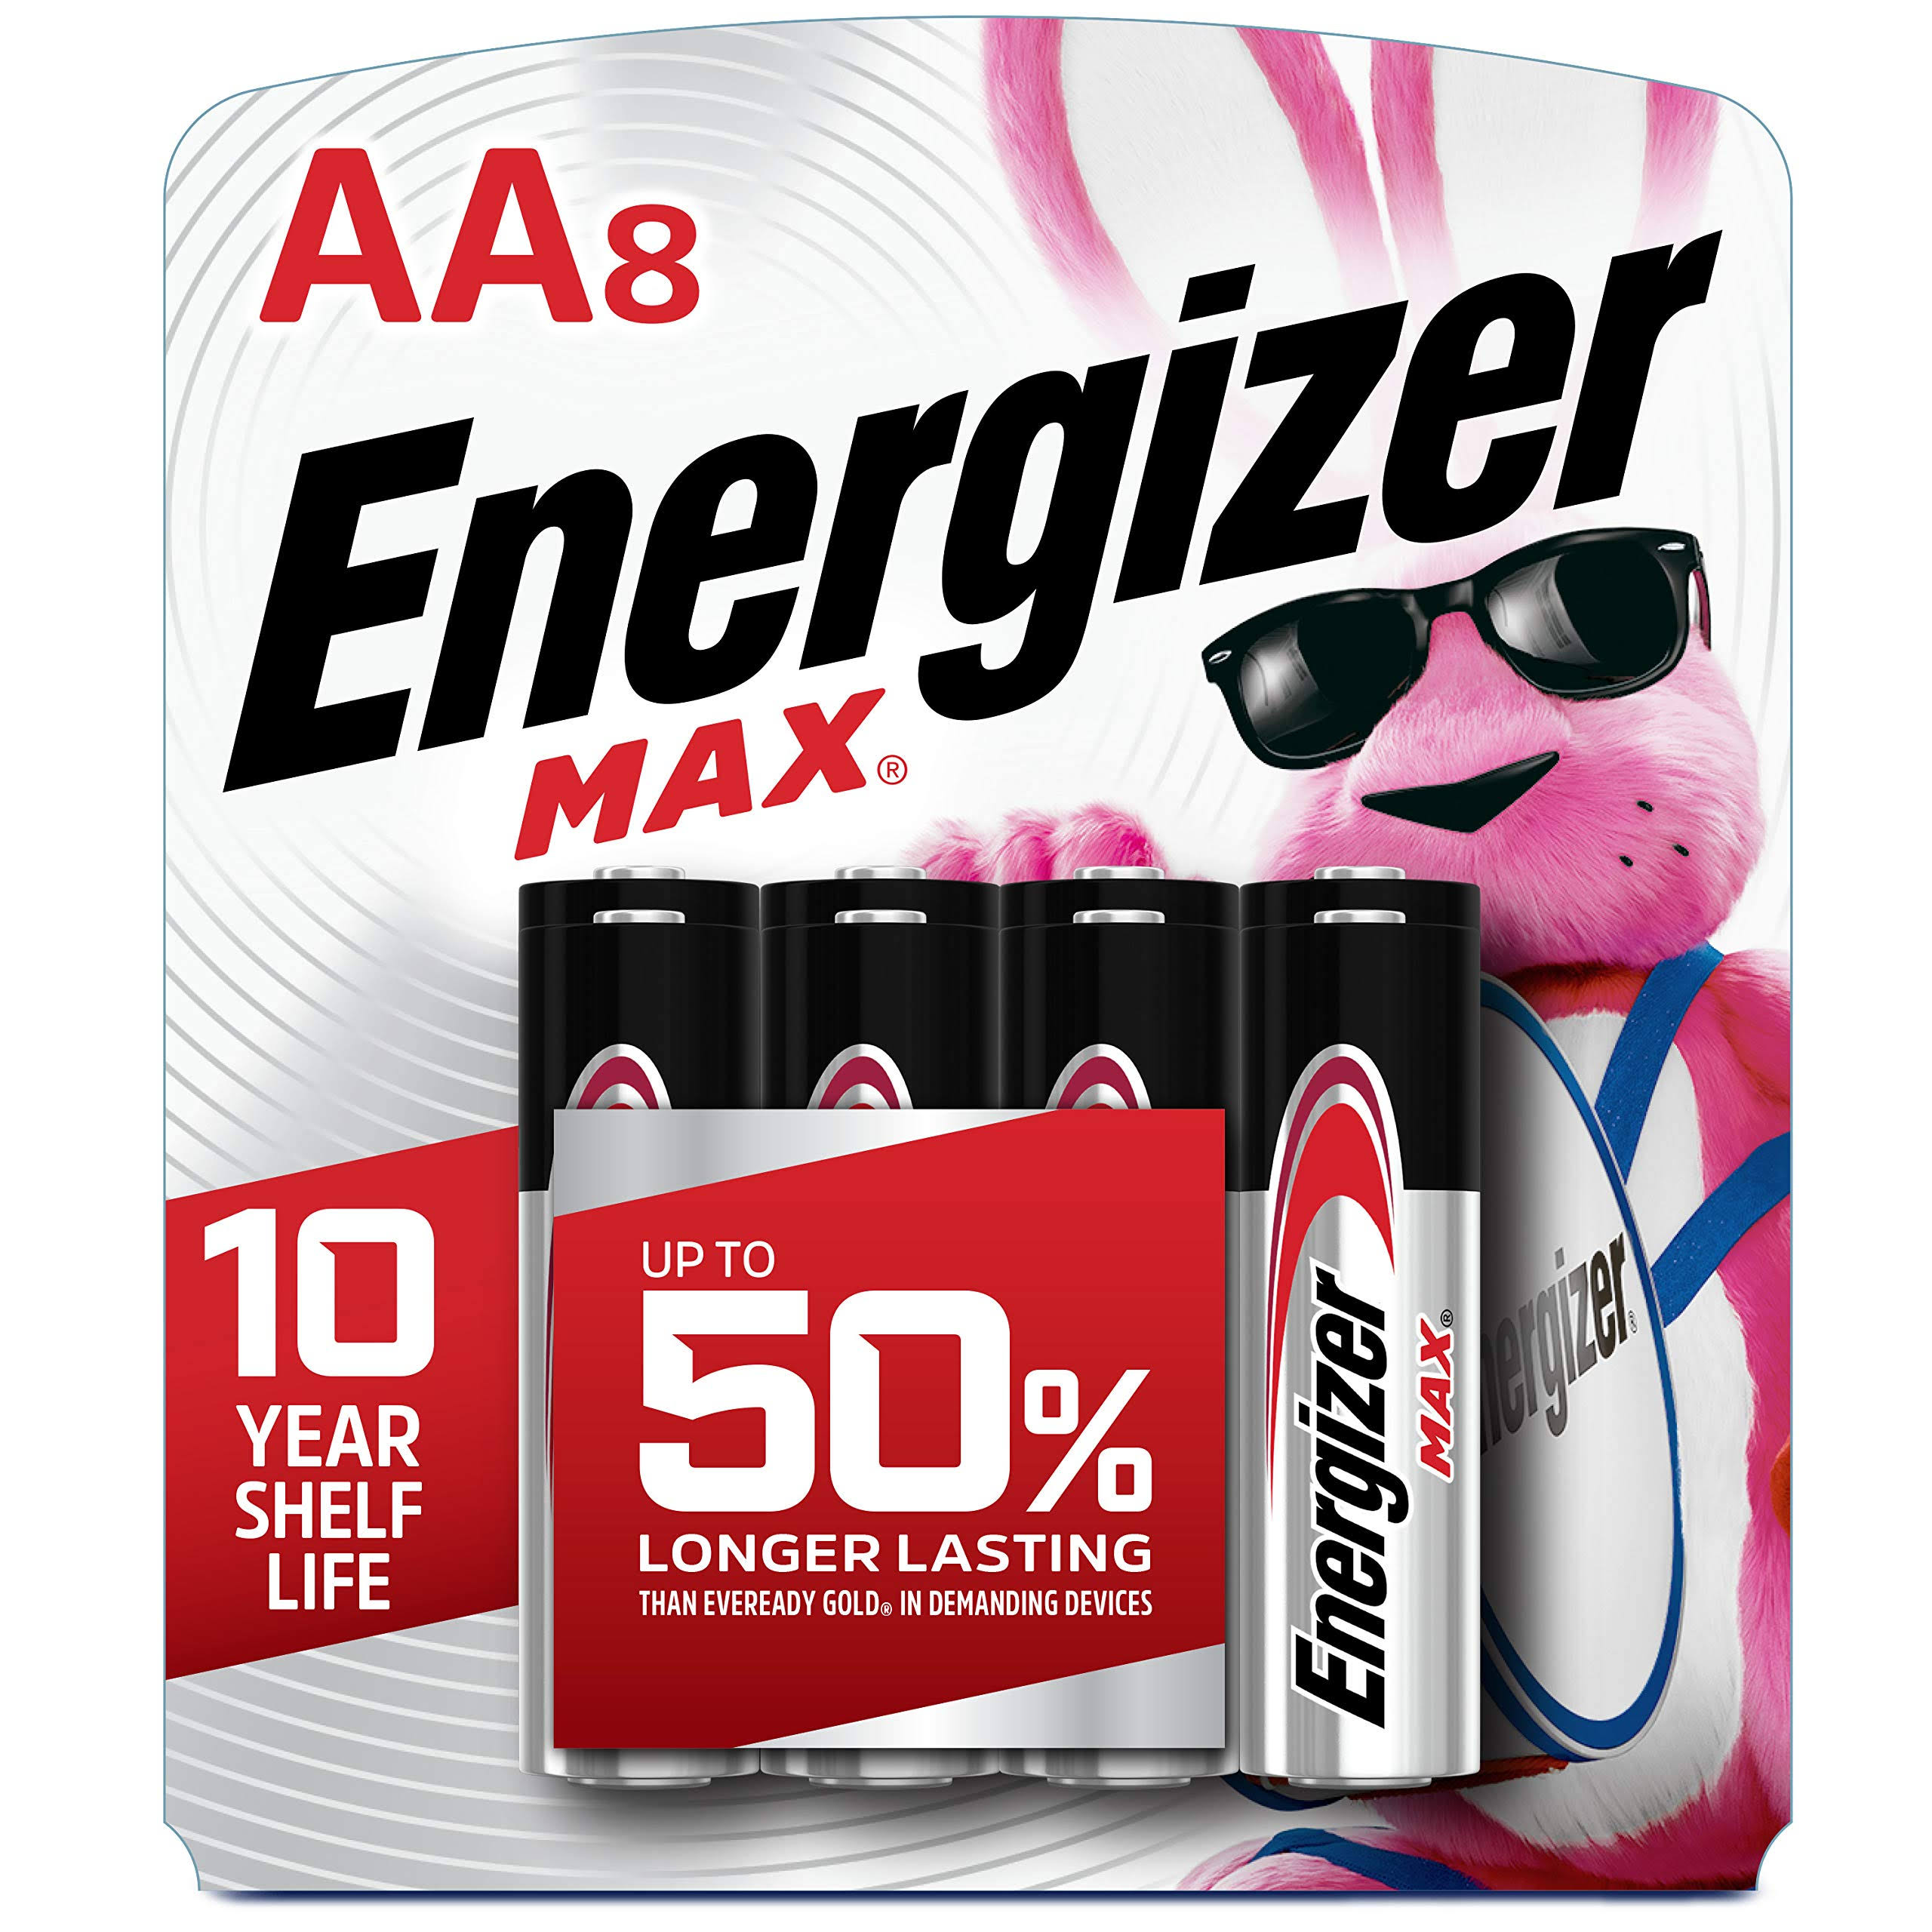 Energizer Max Power Seal Alkaline Batteries - Size AA, x8